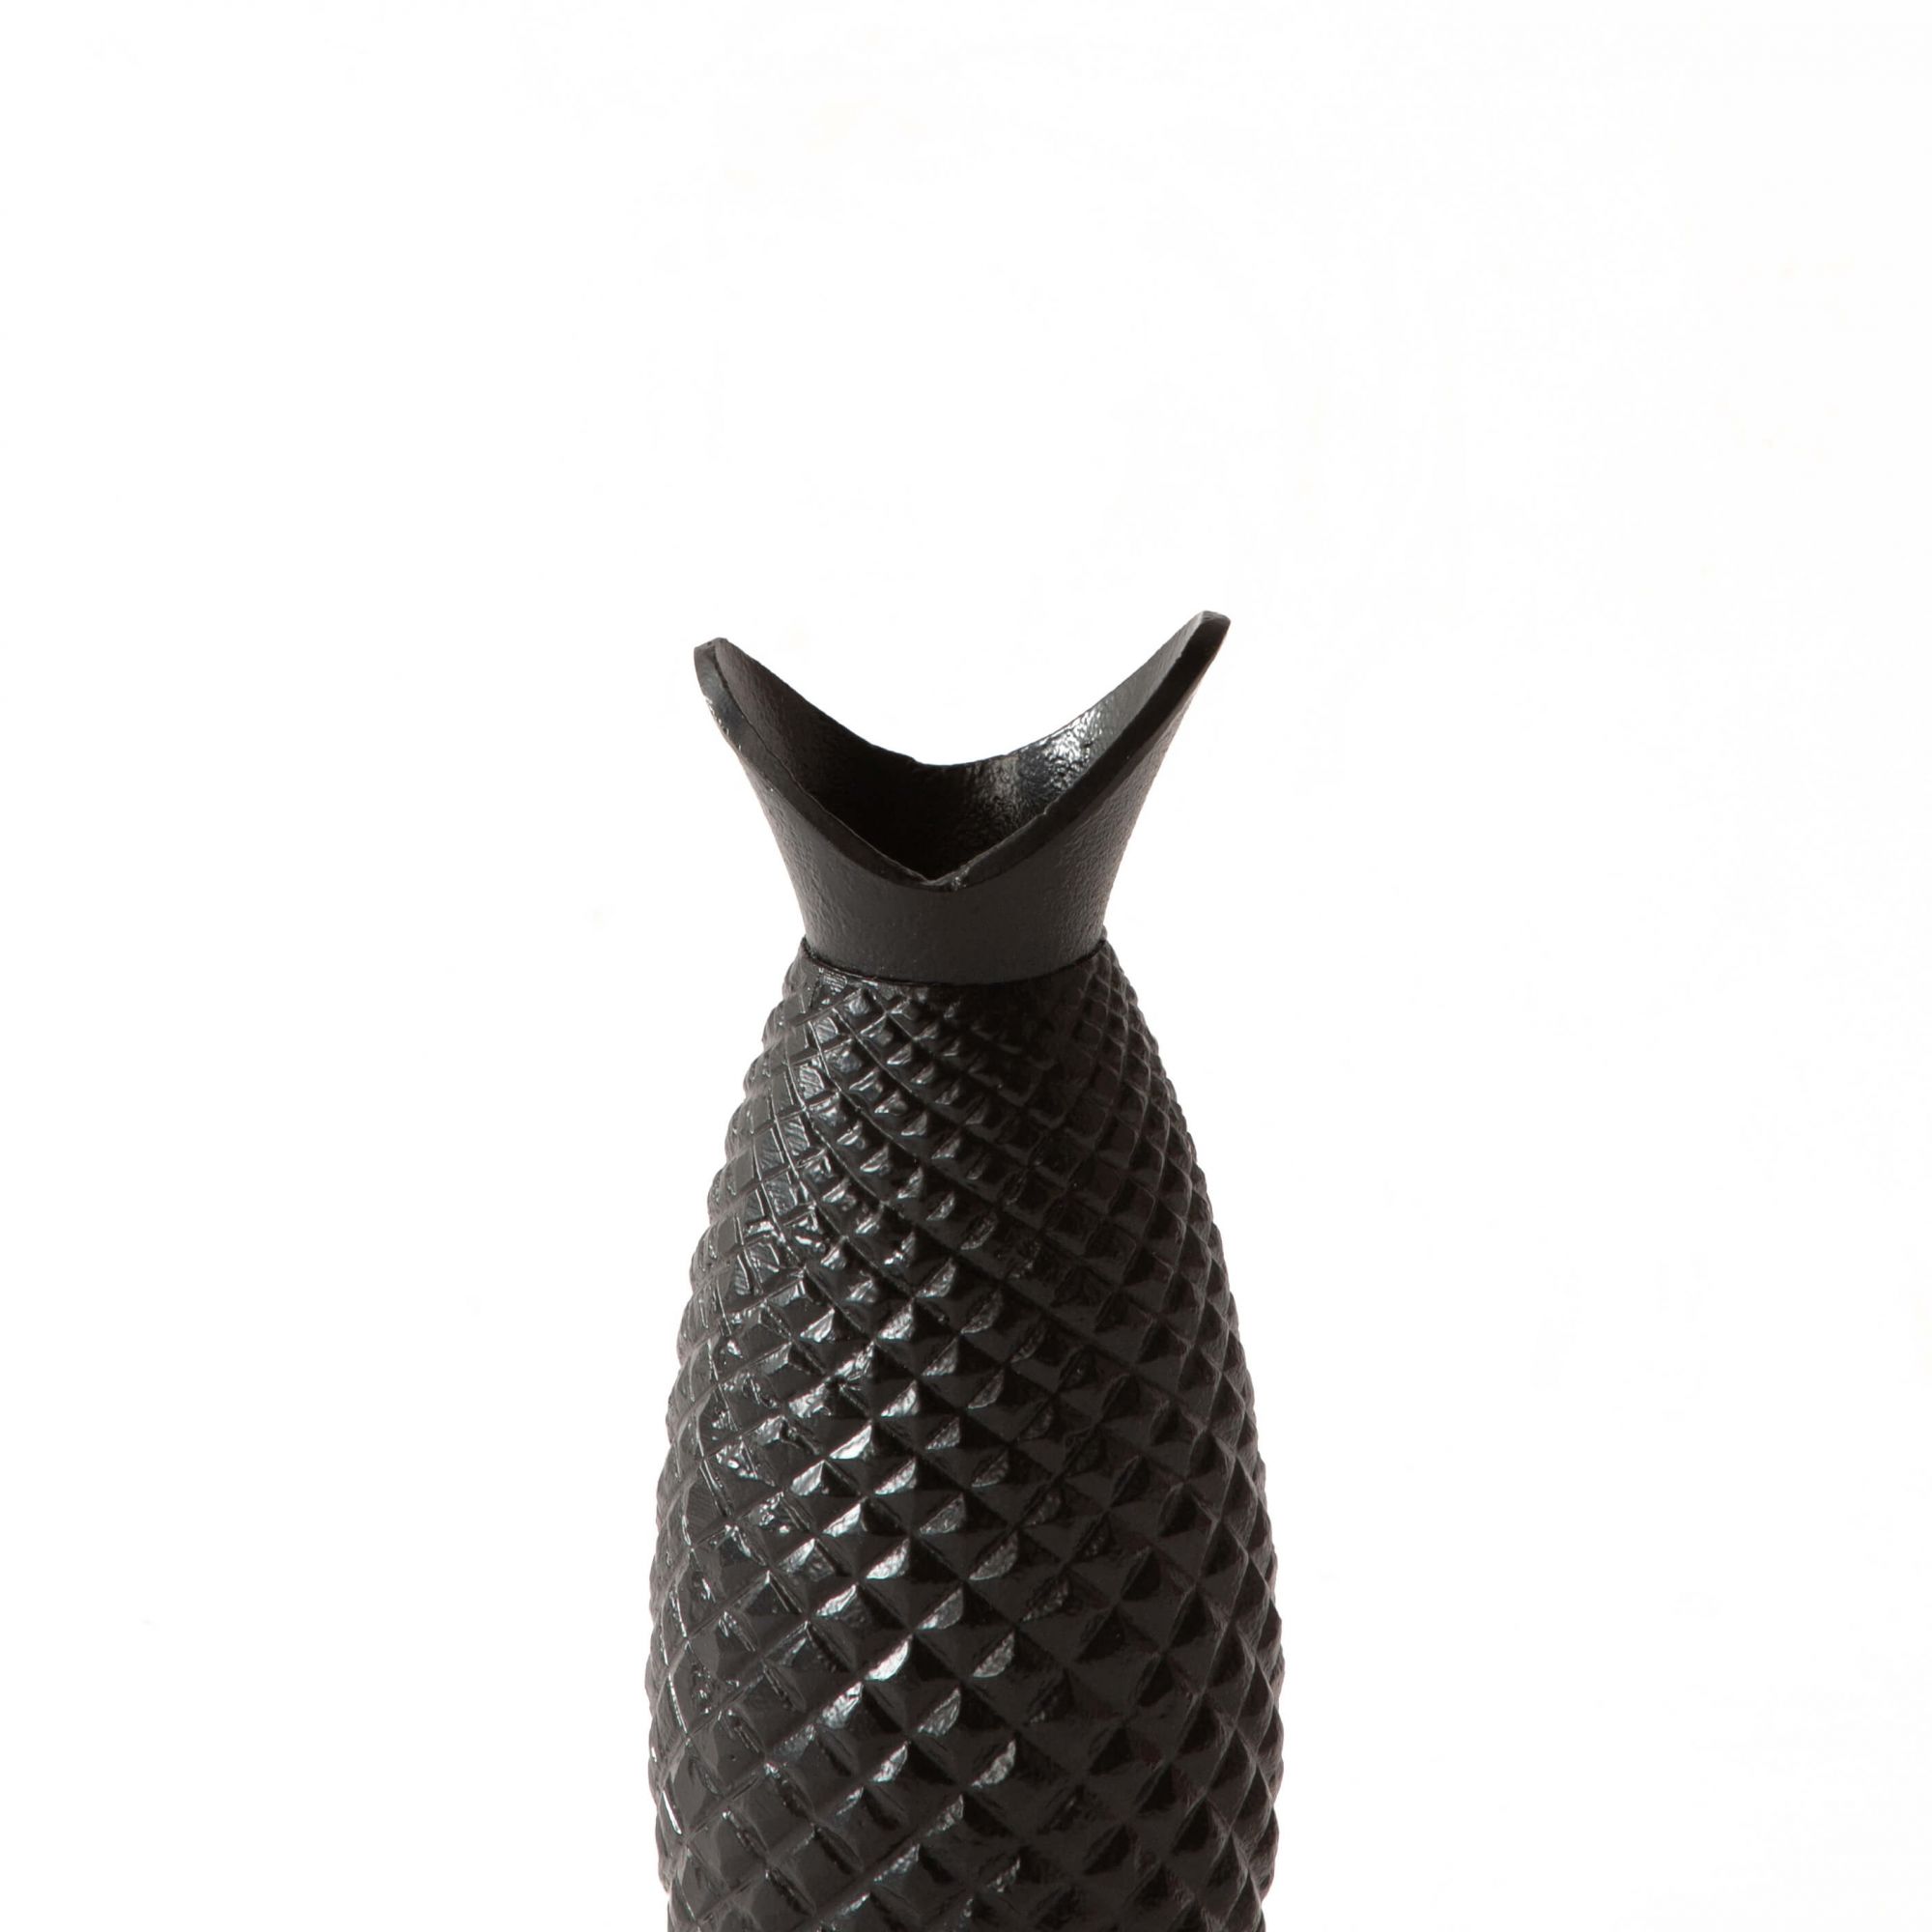 Mottled Metal Vase - Ebony